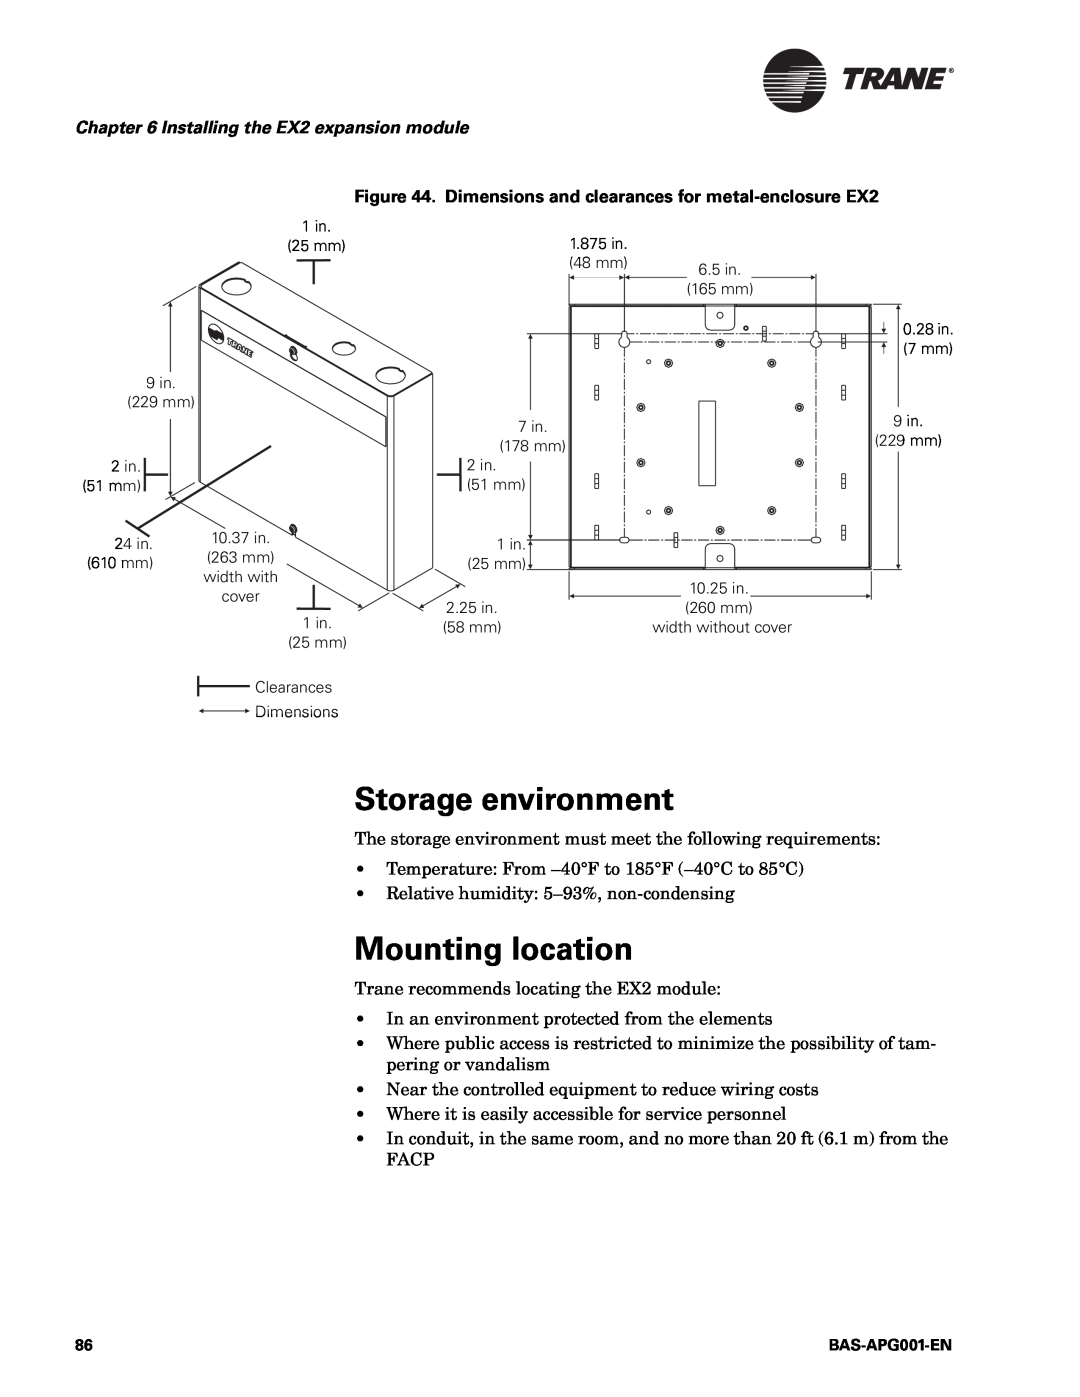 Trane BAS-APG001-EN manual Storage environment, Mounting location, Installing the EX2 expansion module 